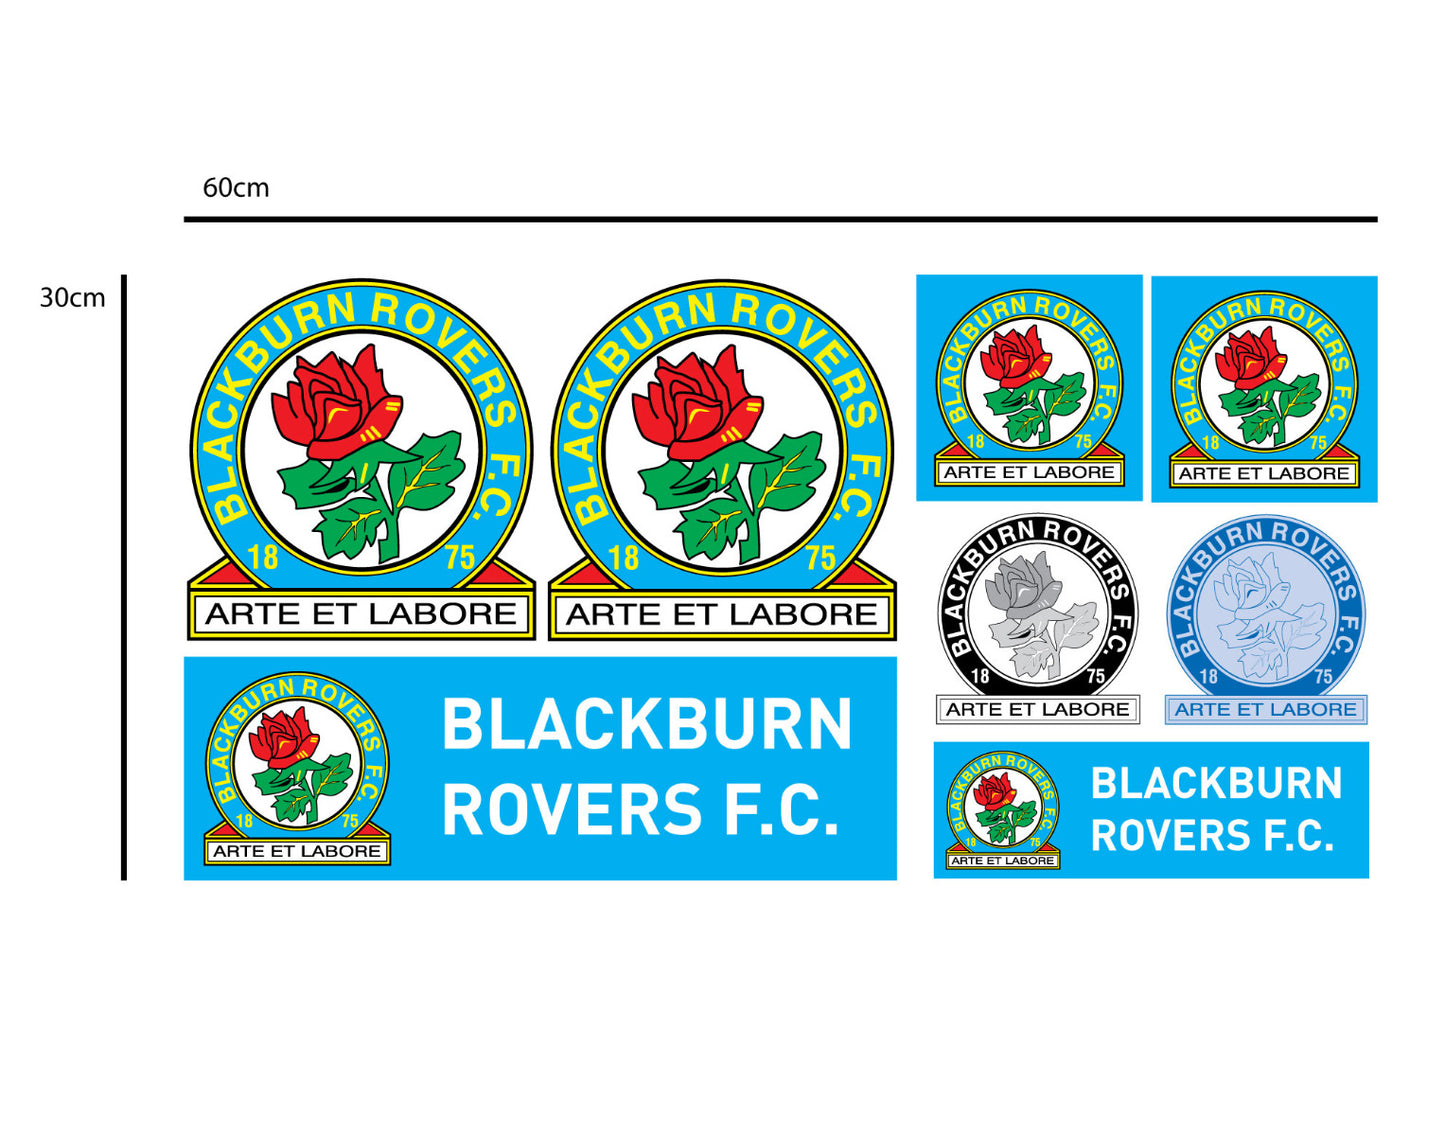 Blackburn Rovers F.C. - Ben Brereton Diaz Celebration Broken Wall Sticker + Decal Set